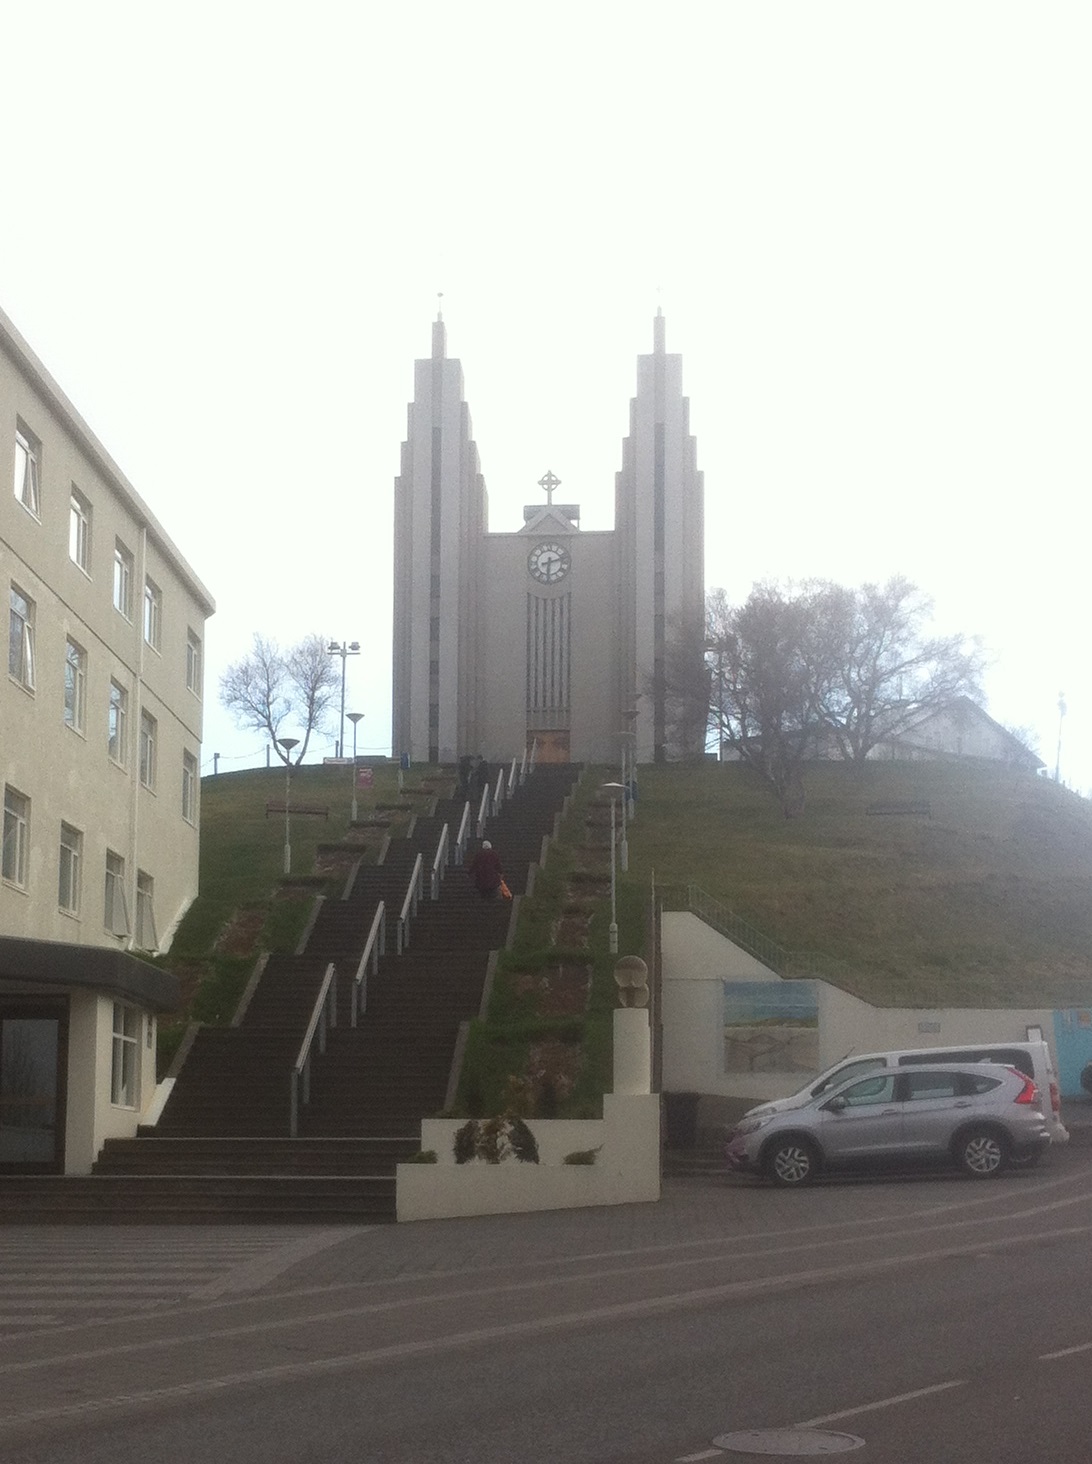 Akureyrarkirkja Lutheran Church, Akureyri Iceland